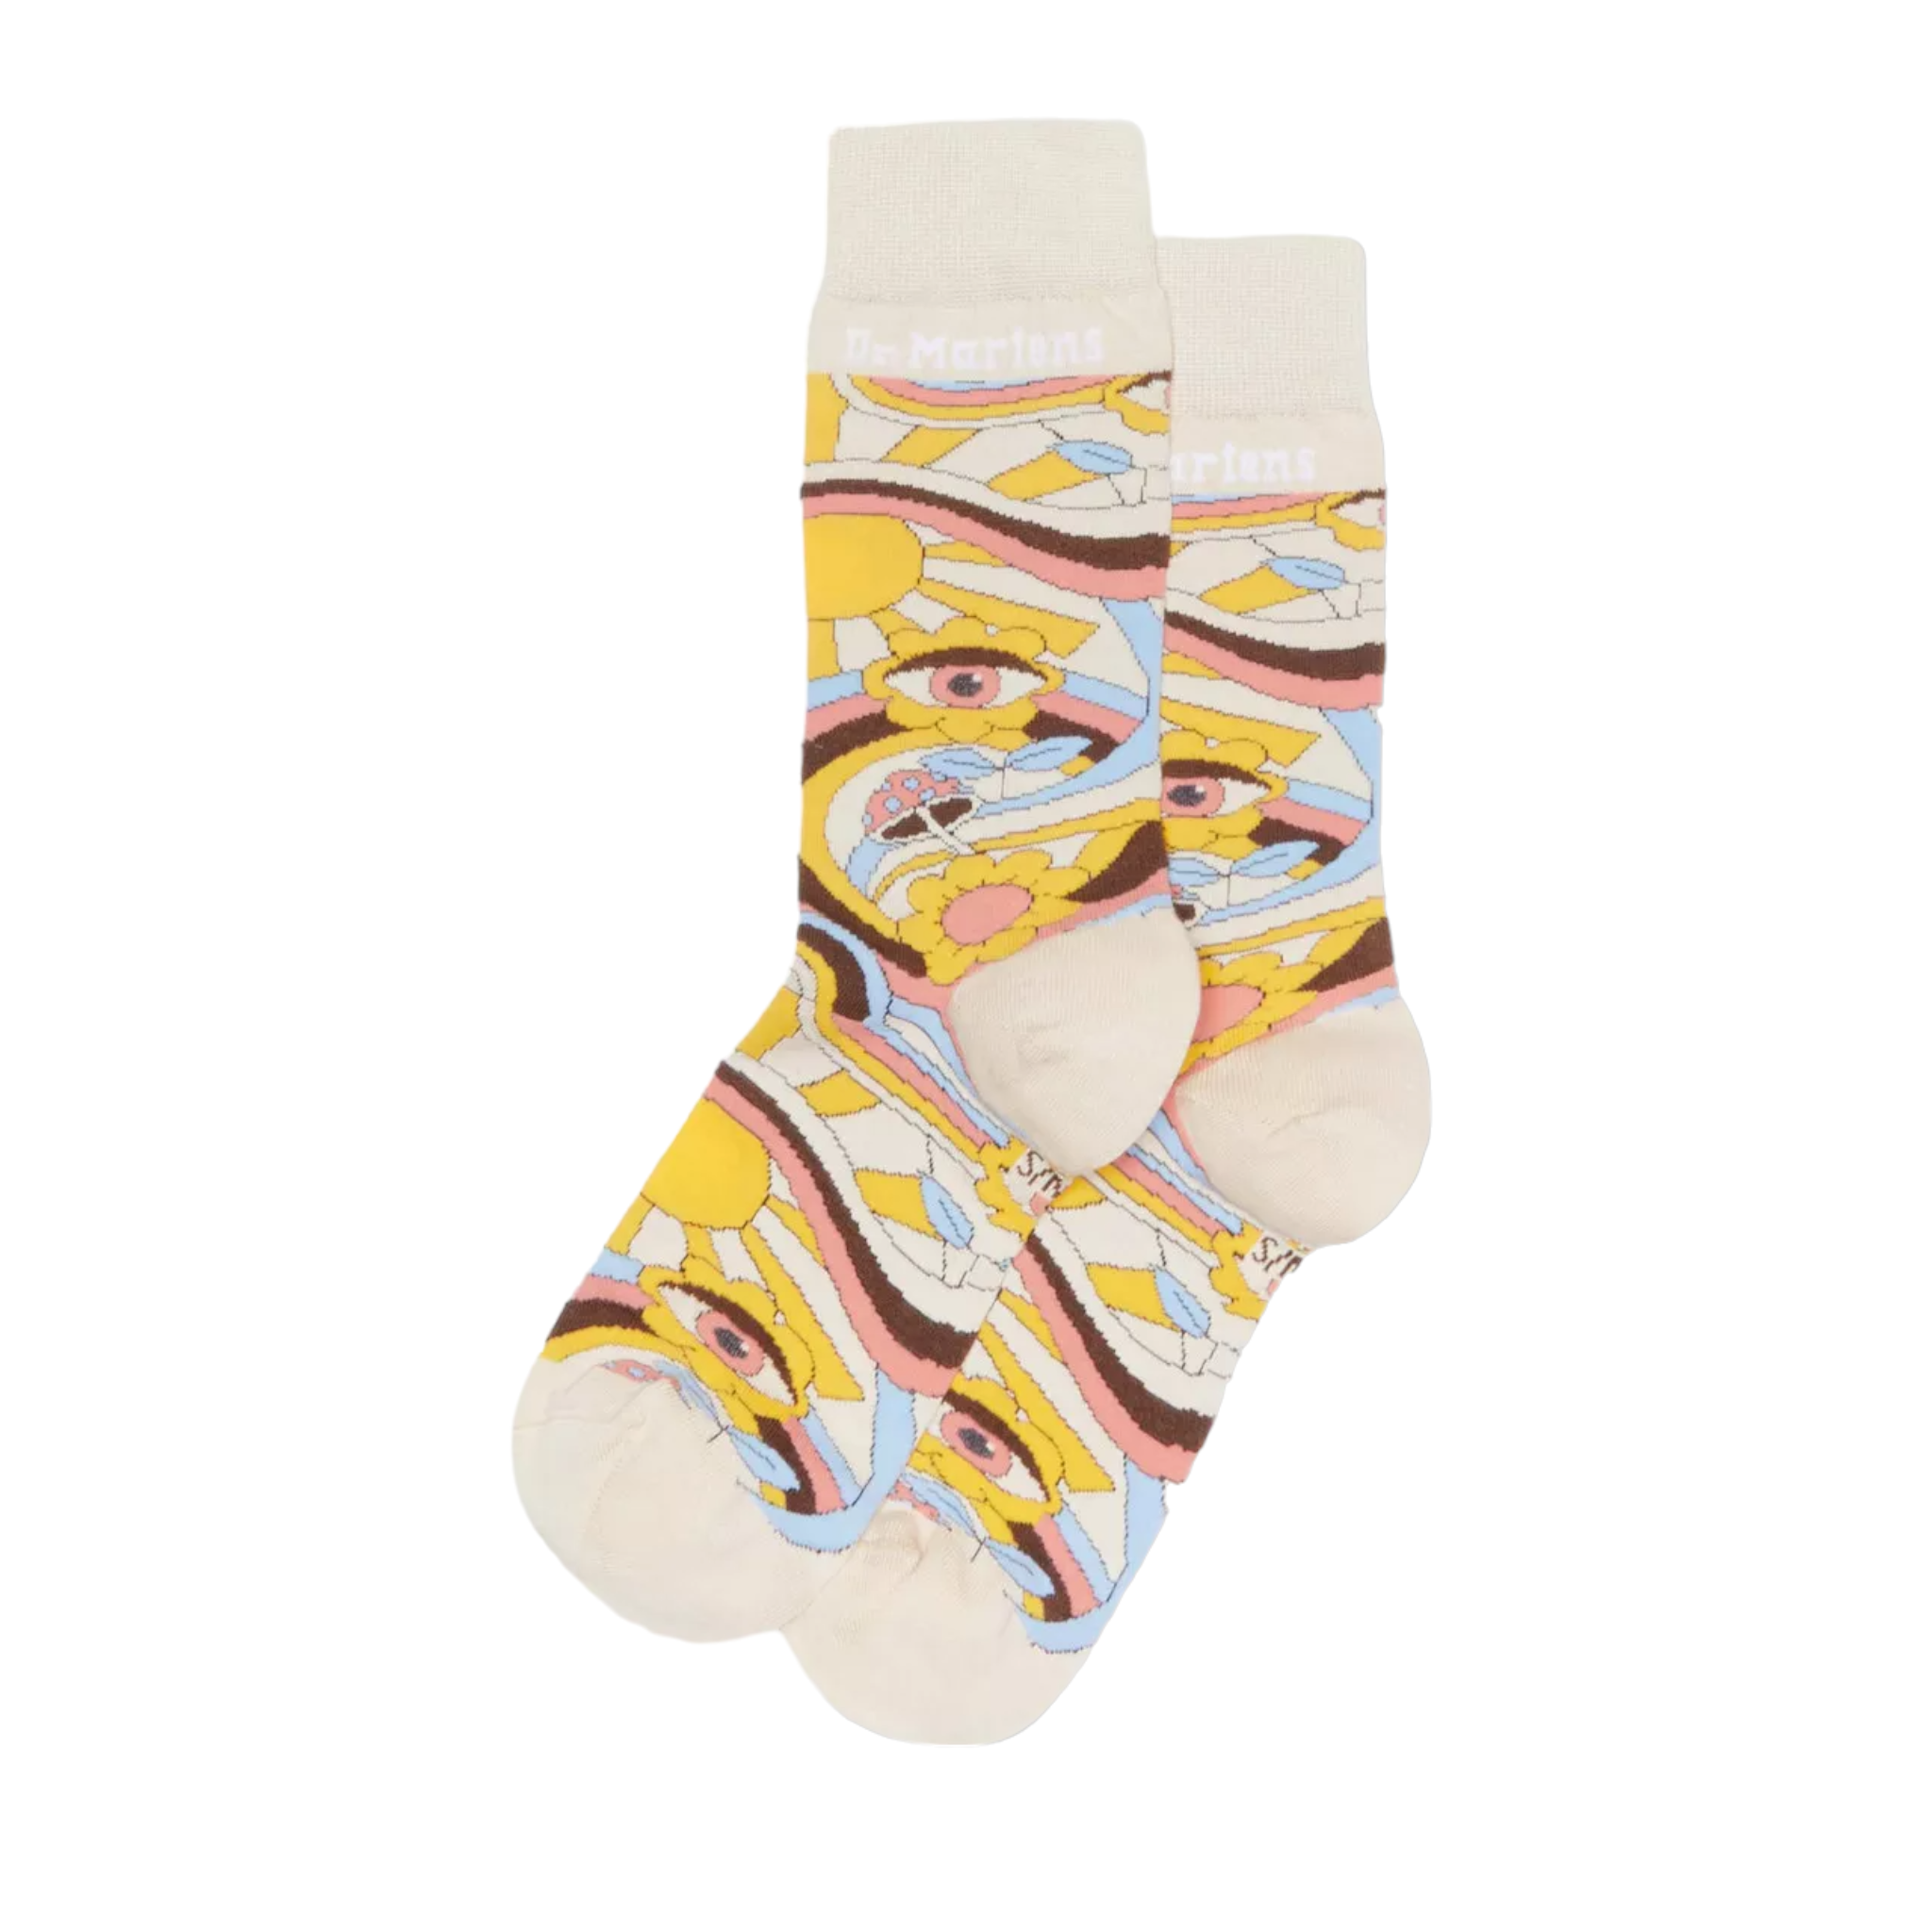 DM Retro Ray Printed Sock - shoe&me - Dr. Martens - Socks - Hosiery, Socks